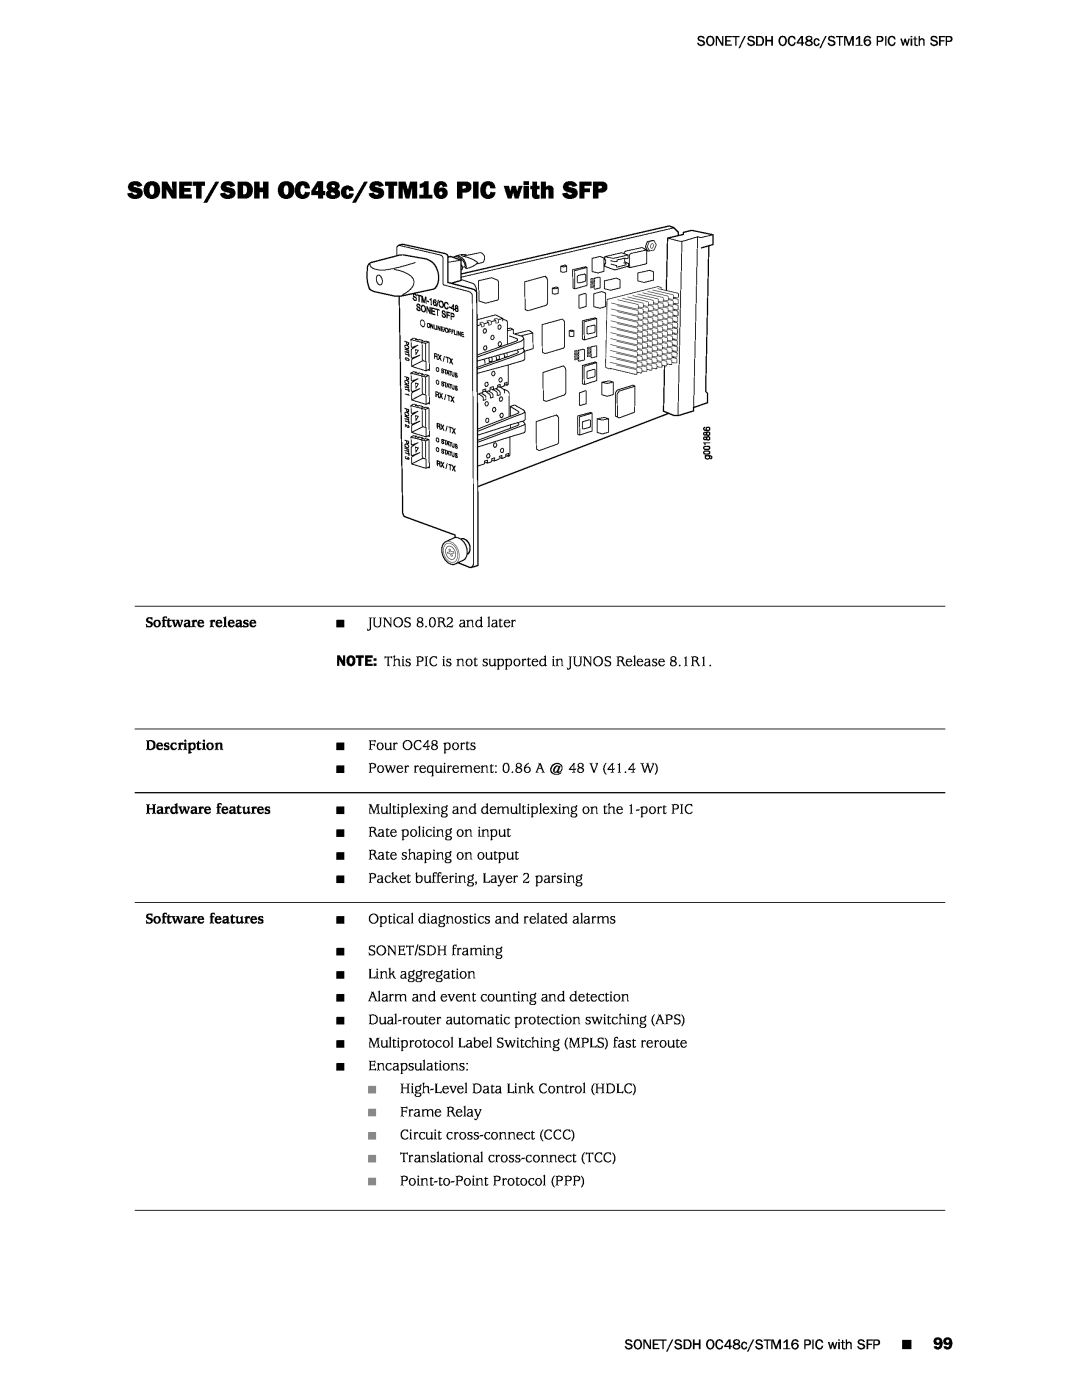 Juniper Networks M120 manual SONET/SDH OC48c/STM16 PIC with SFP, Software release, Description, Hardware features 